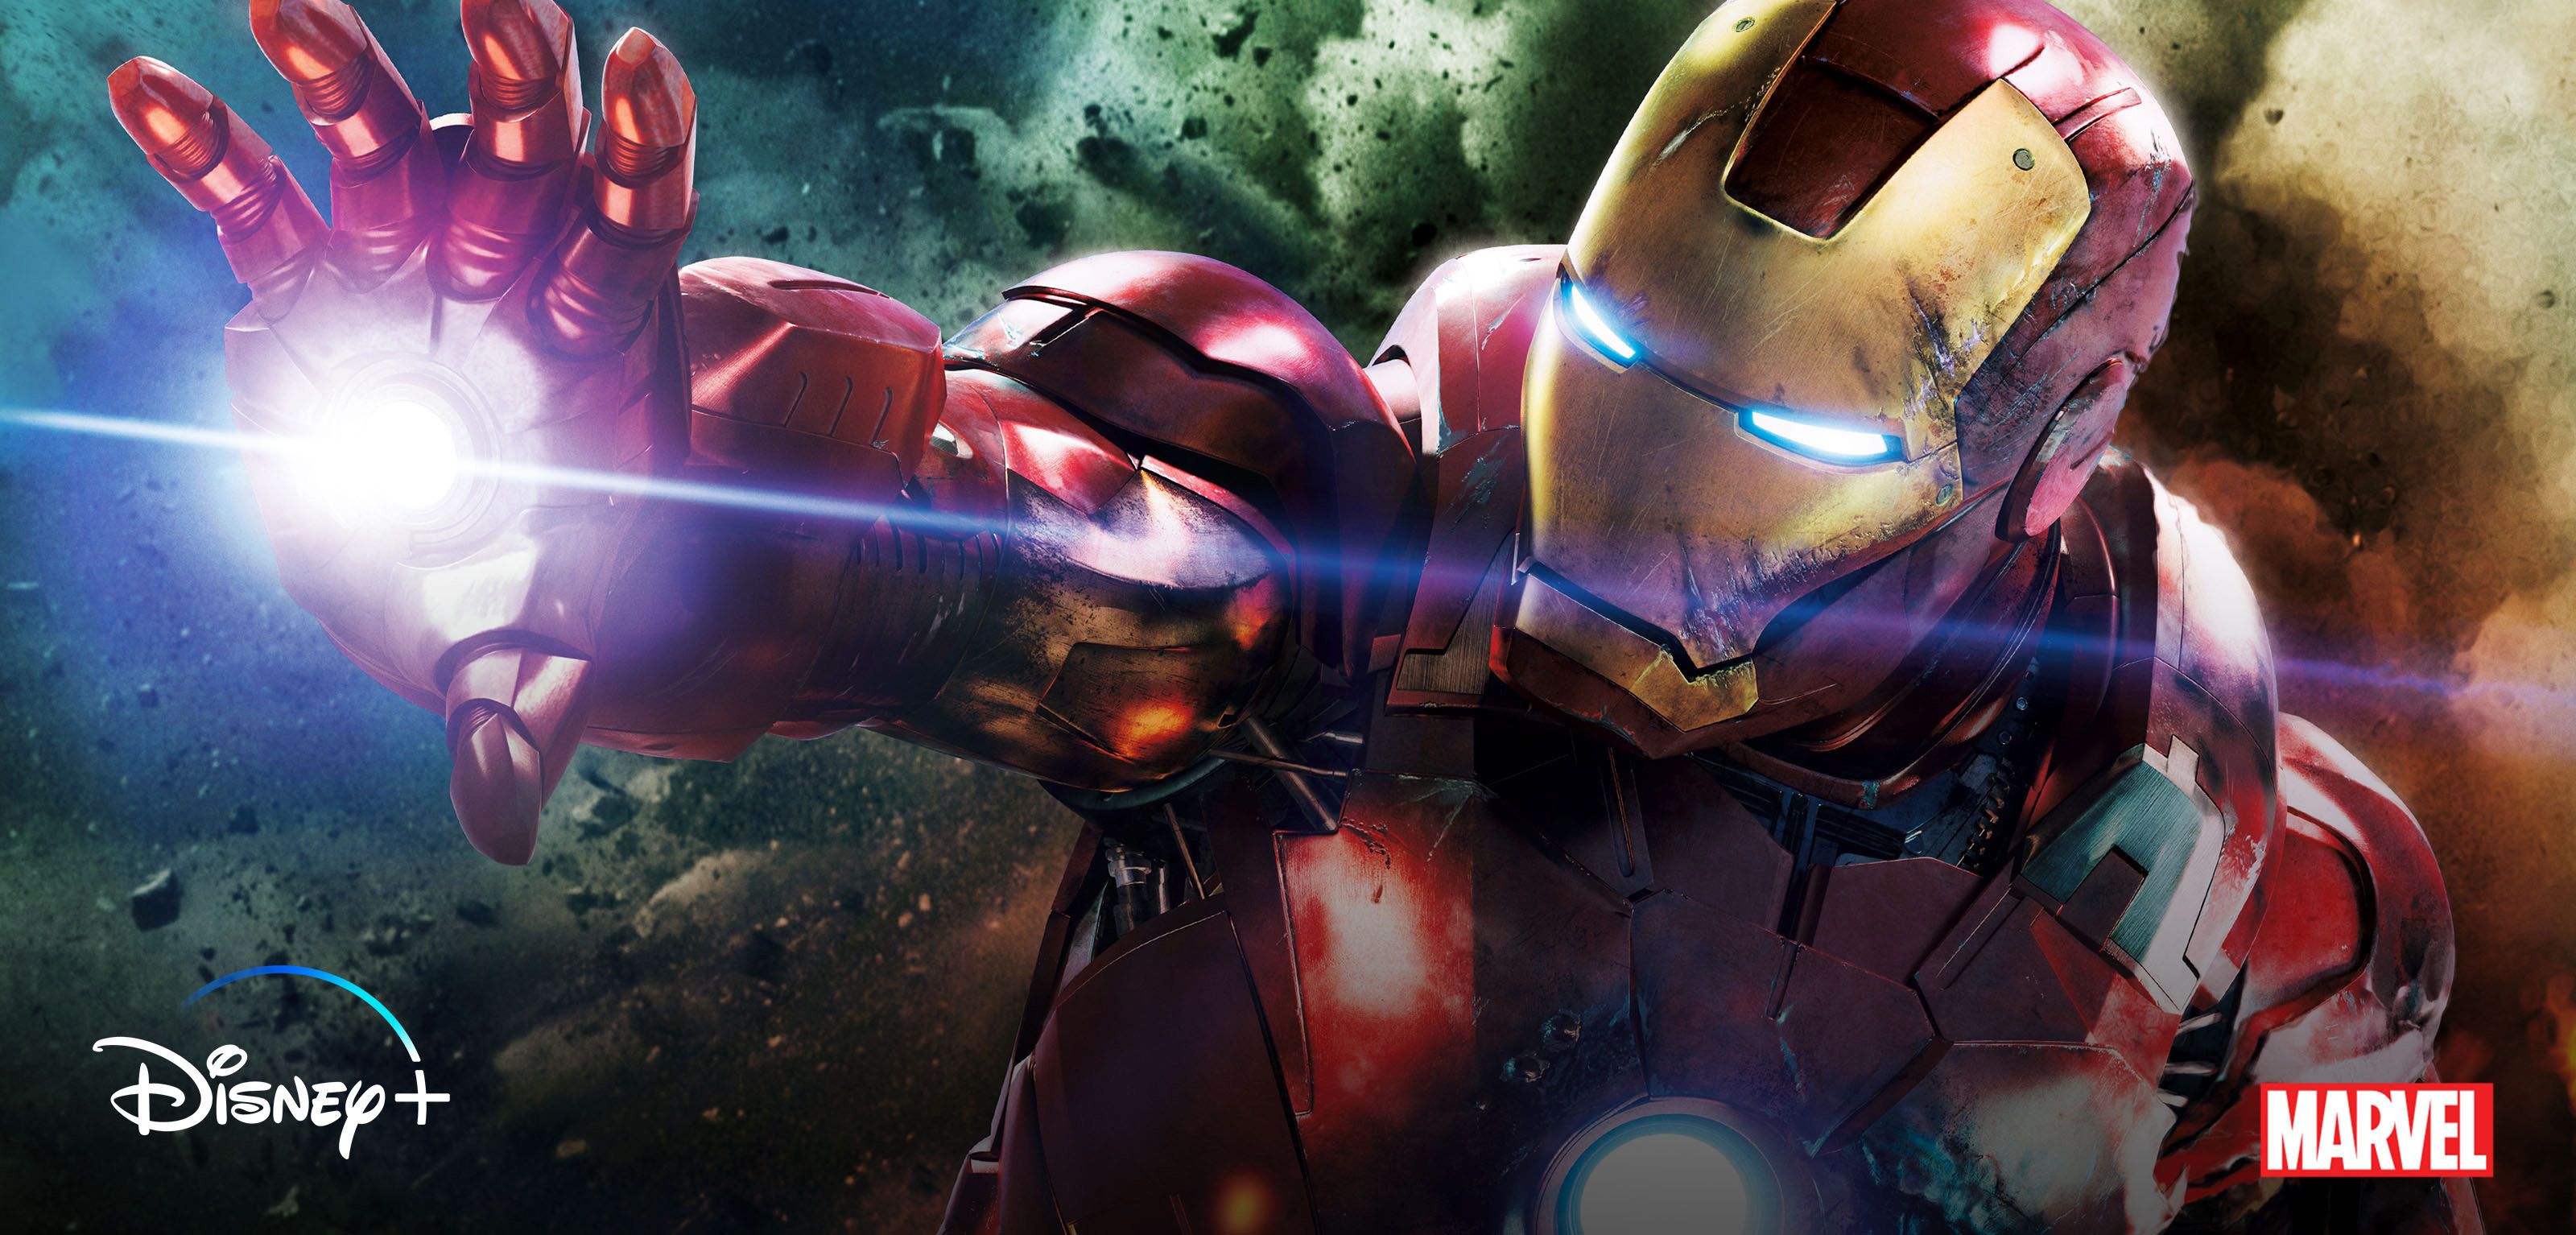 A still image of Iron Man